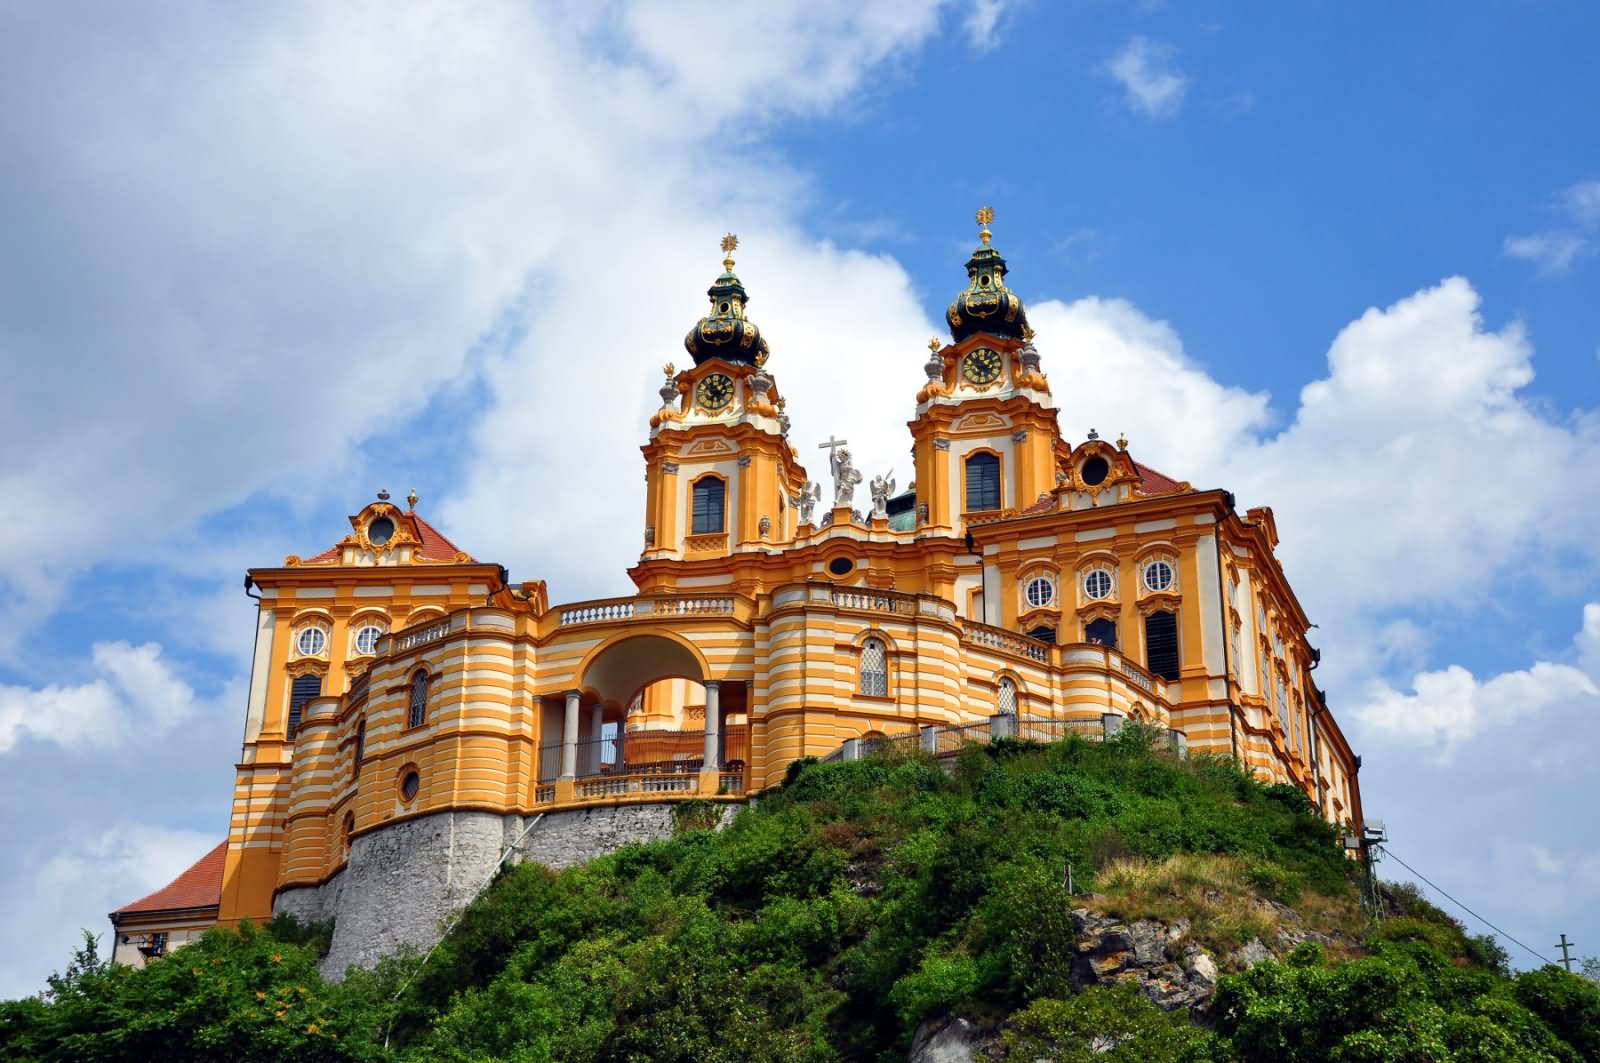 The Melk Abbey On A Rocky Outcrop In Austria